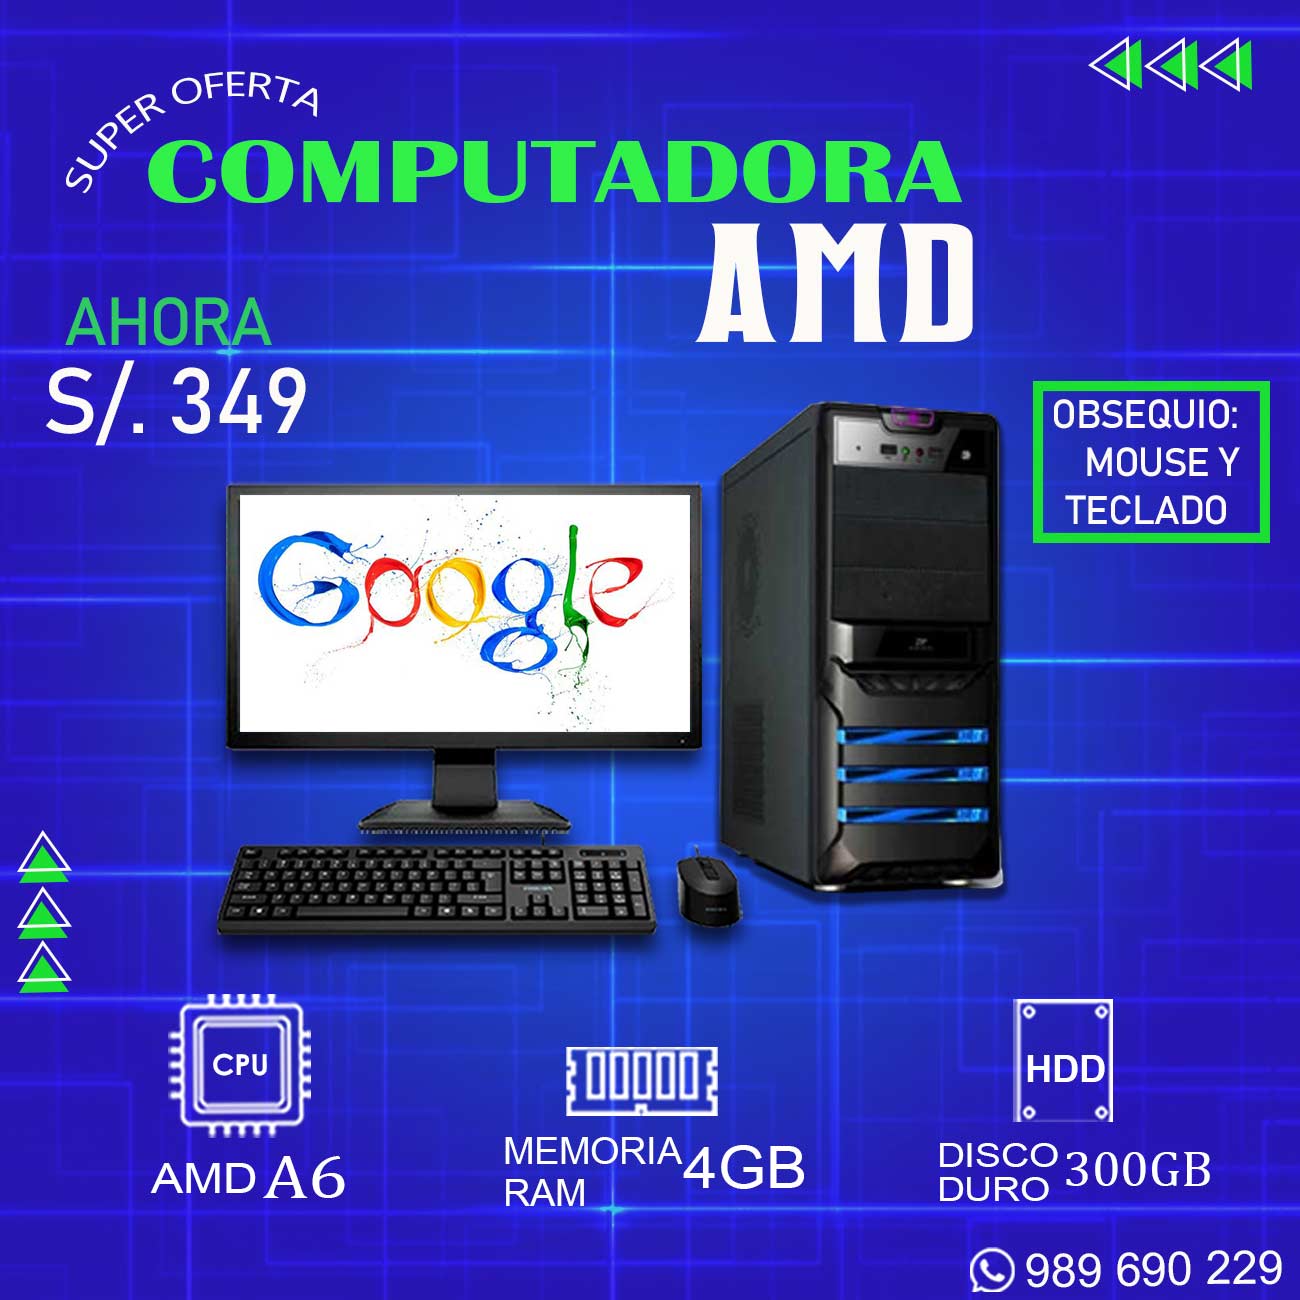 OFERTA EN COMPUTADORA AMD 